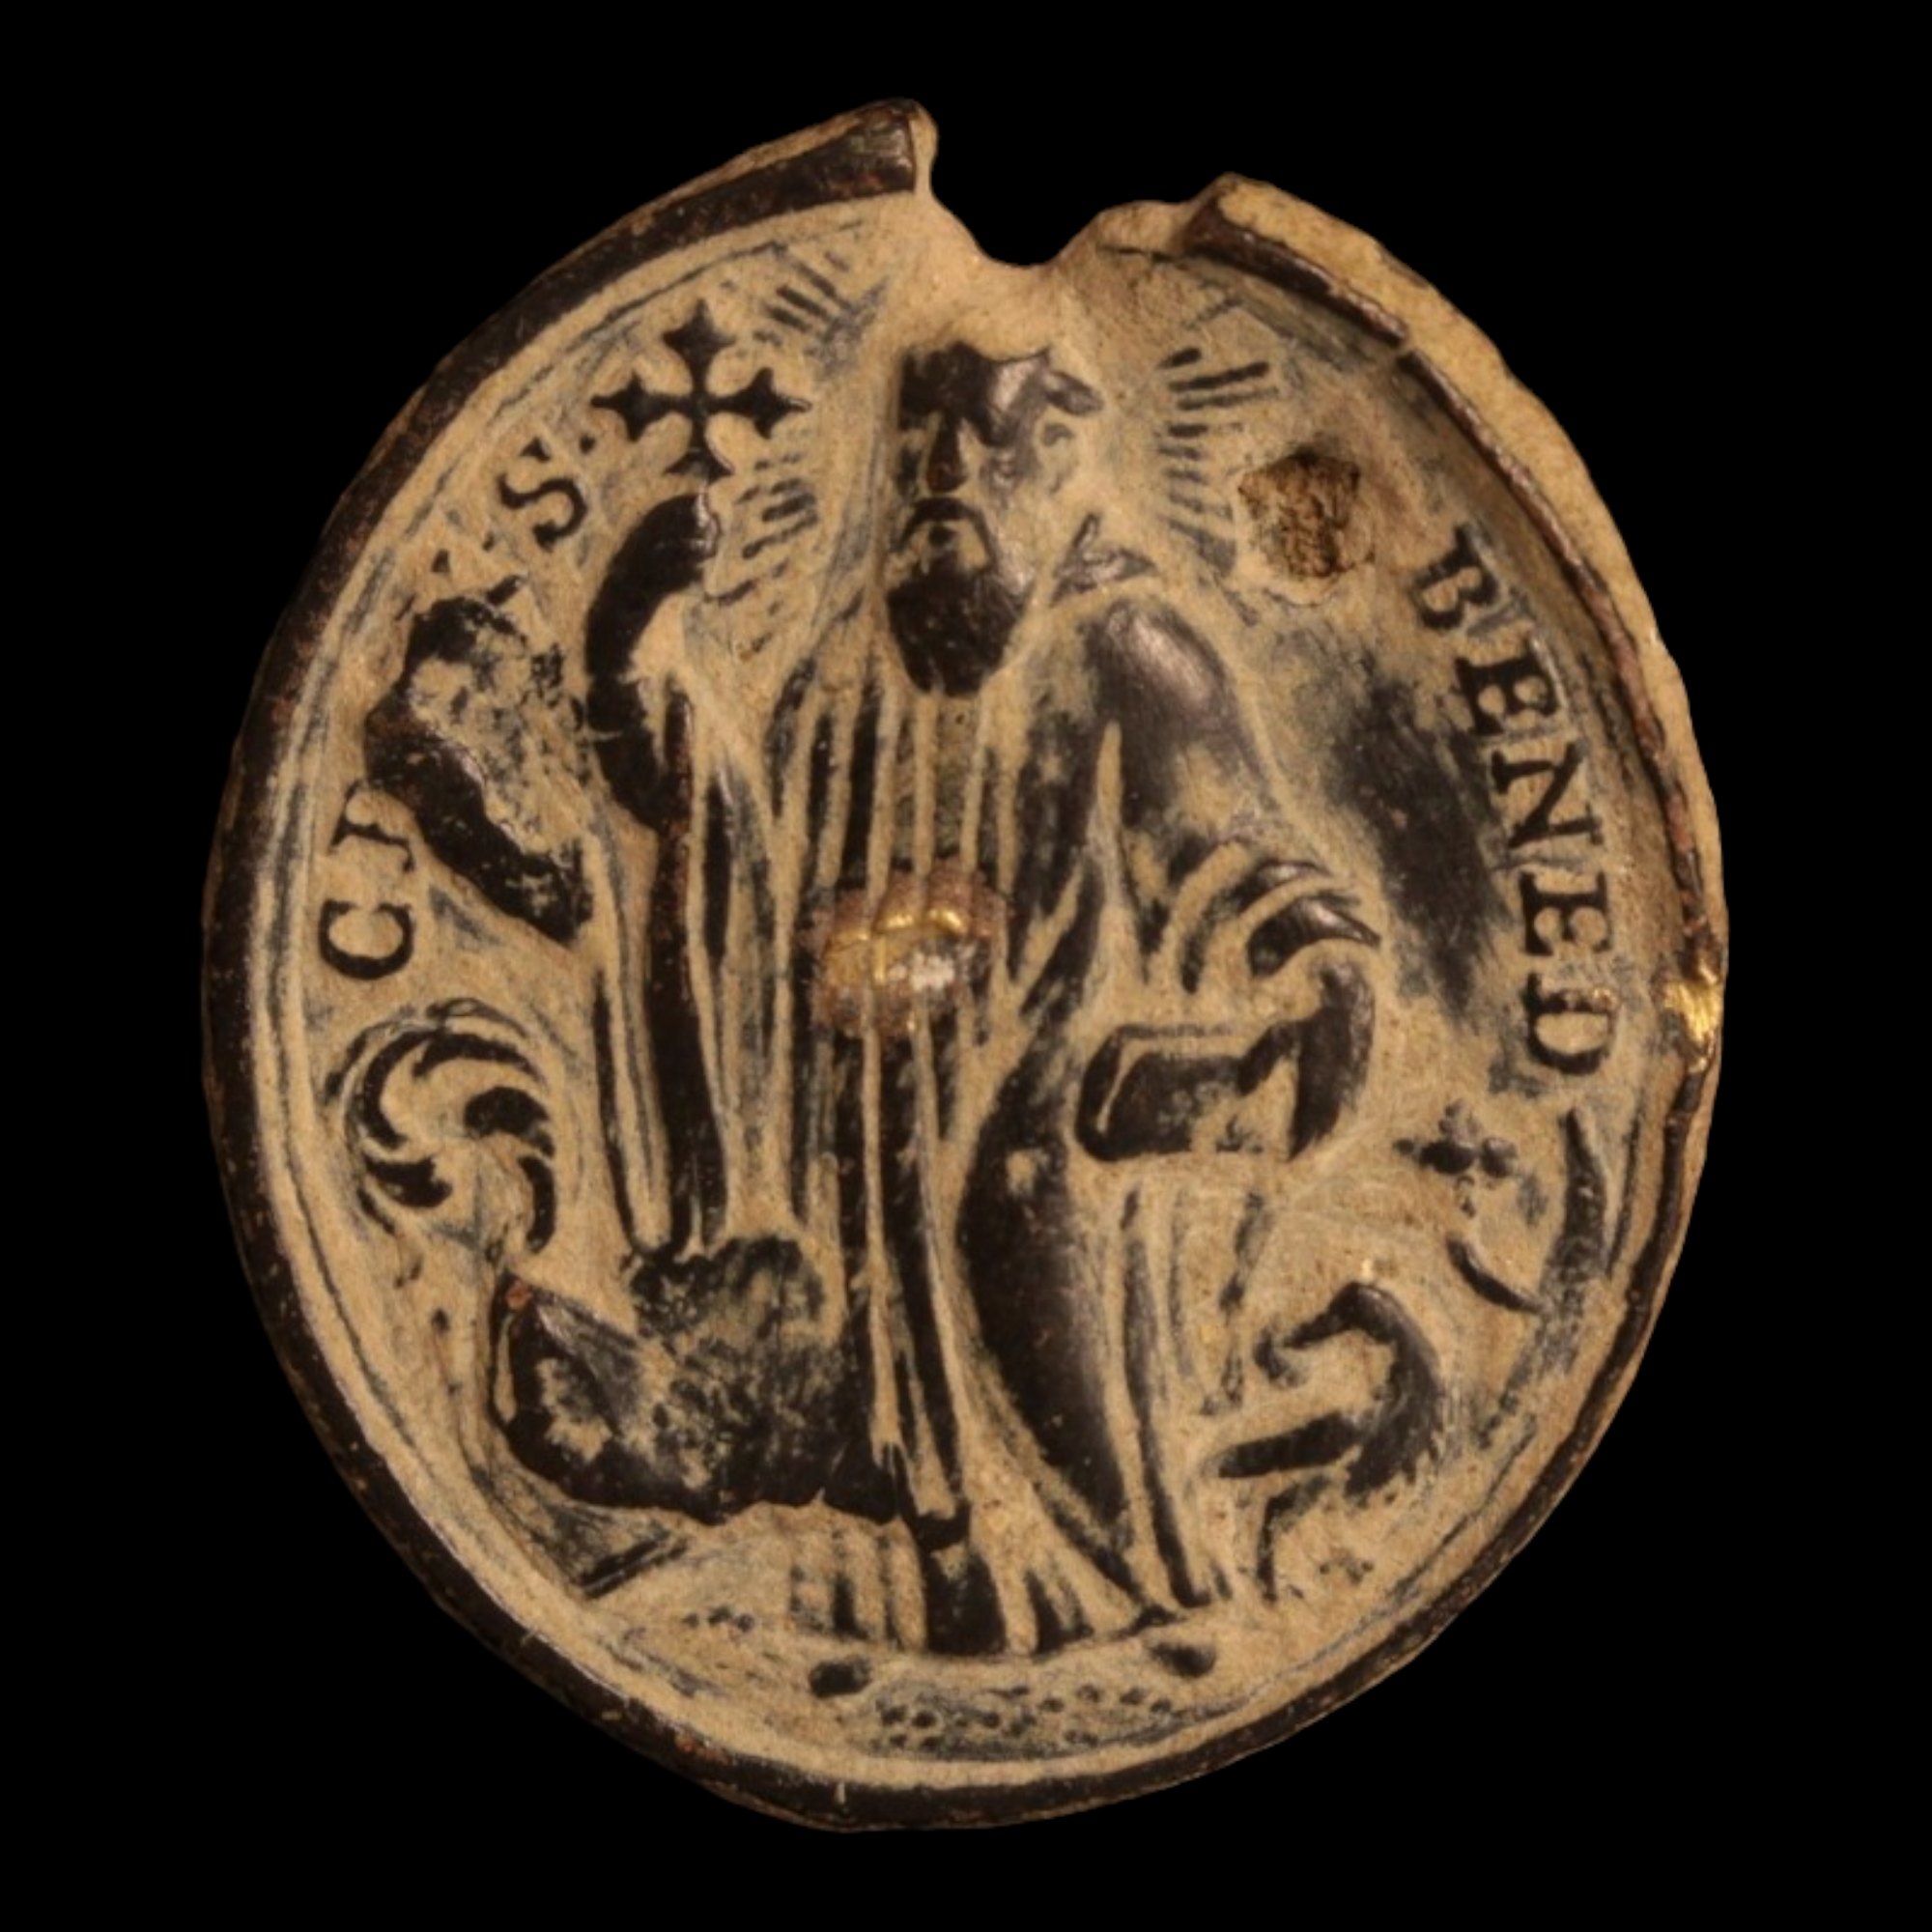 Religious Medal, Catholic Church, St. Benedict of Nursia, 27mm - 1500s to 1700s - Spanish Empire